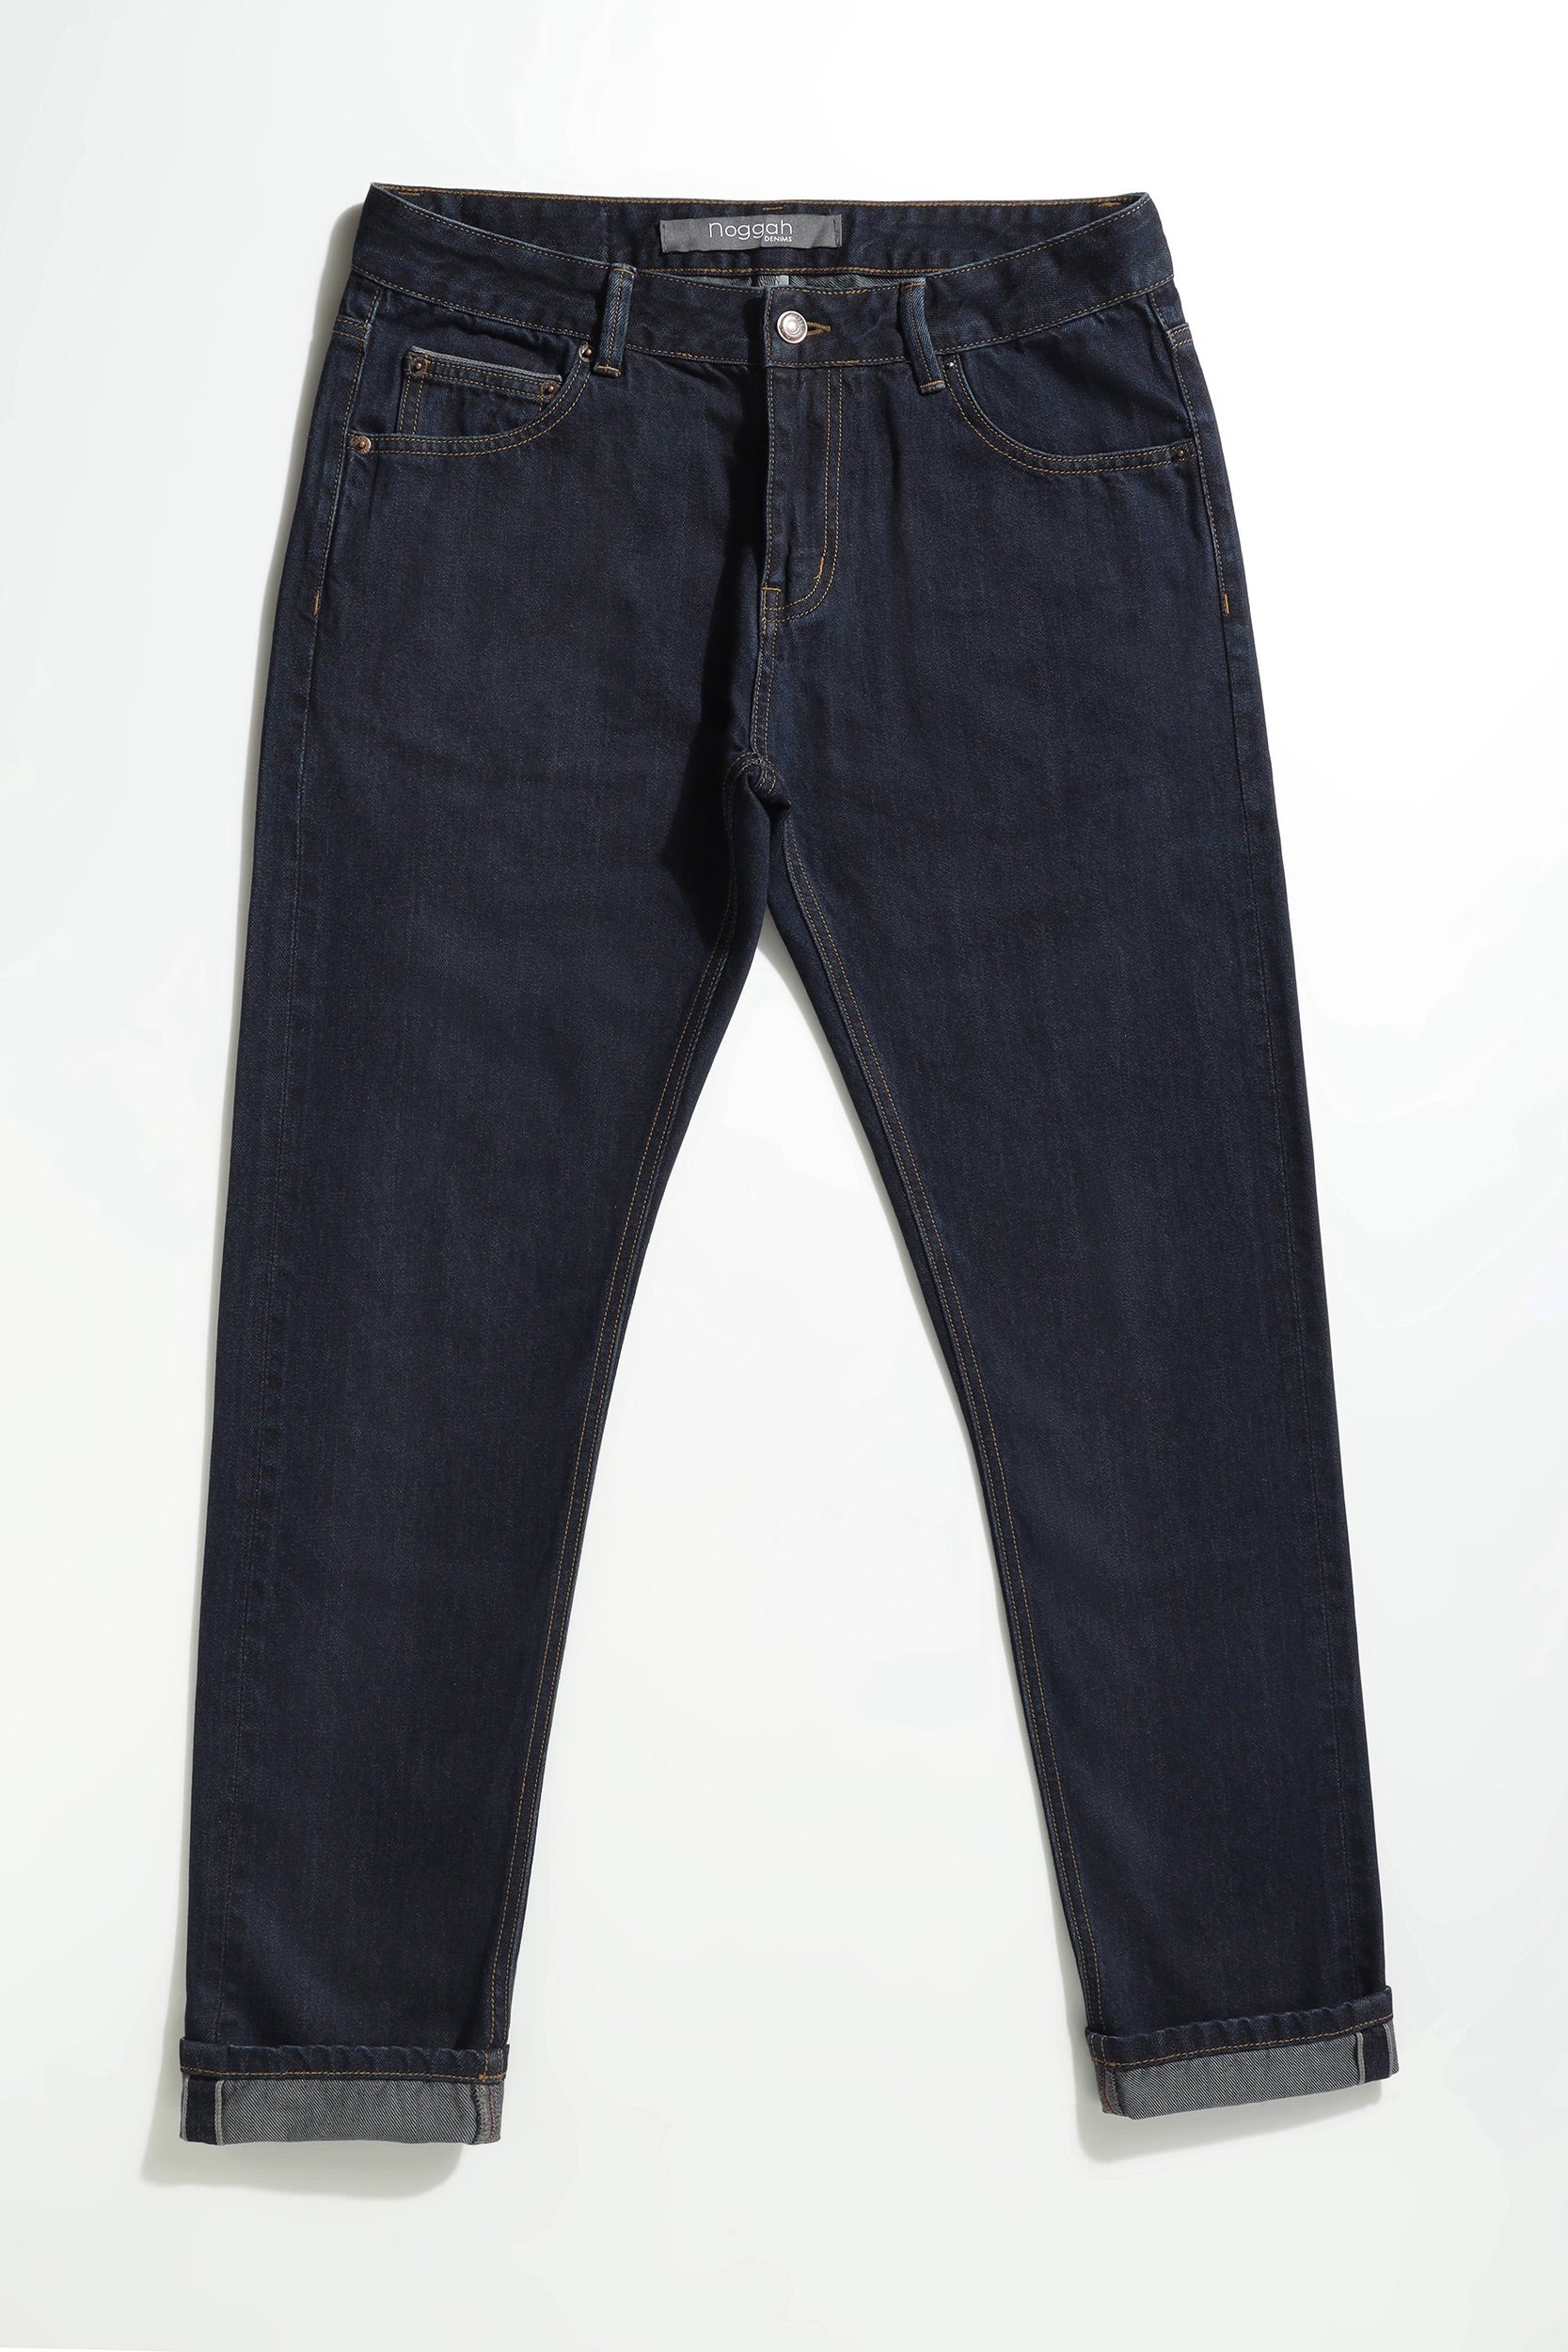 Podge Mens Casual Stretch Denim Jeans Waist Size 2836